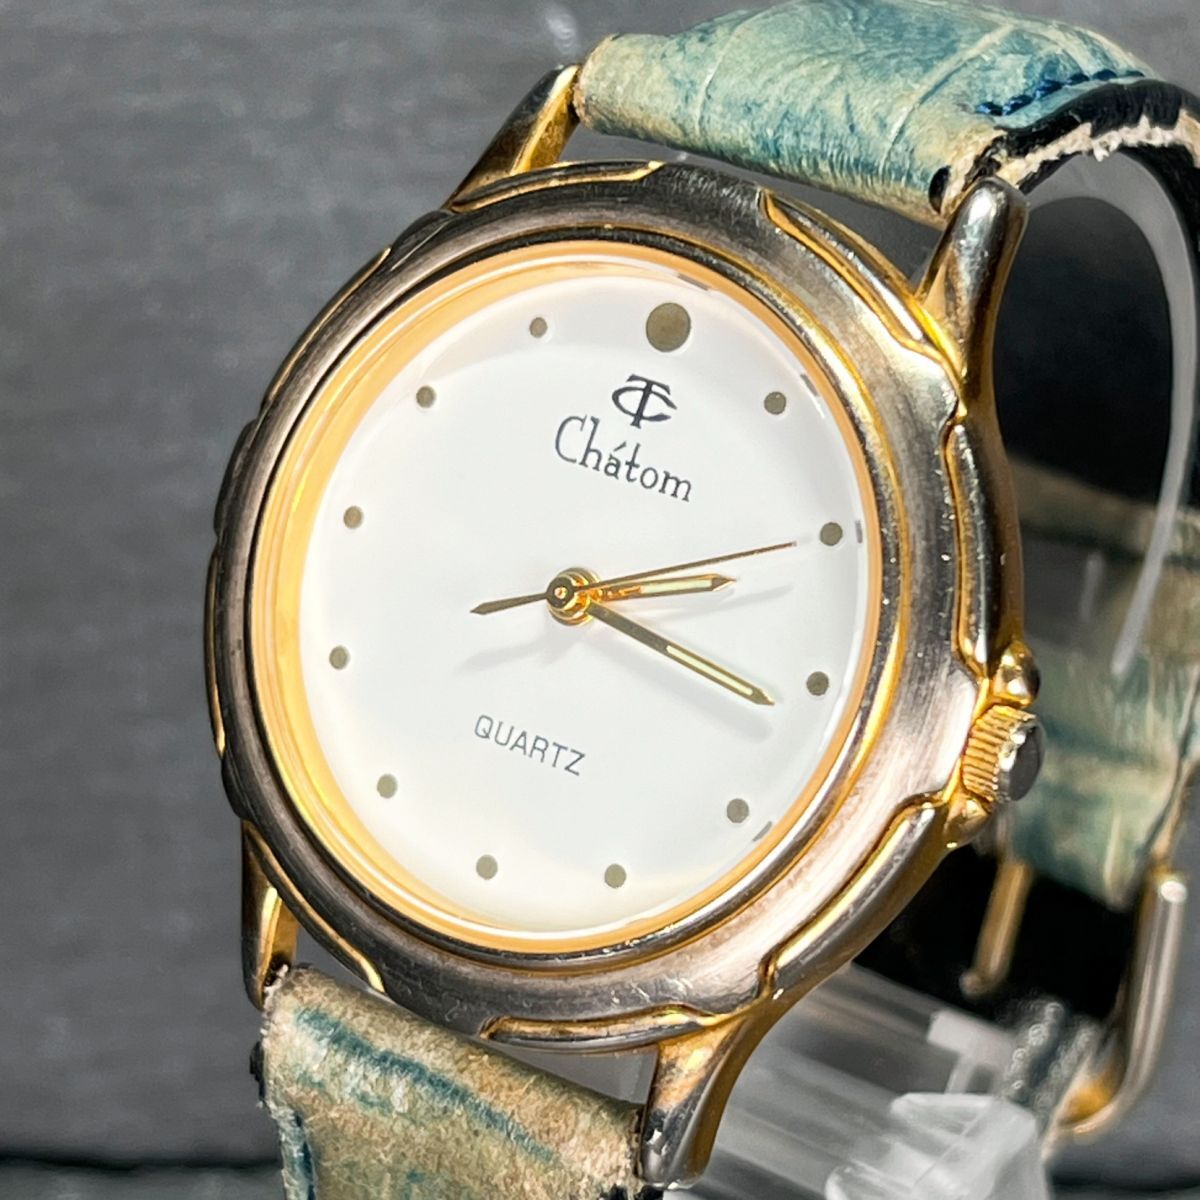 Chatom チャトム QUARTS クオーツ ユニセックス 腕時計 アナログ 3針 ホワイト文字盤 ゴールド ブルー レザーベルト シンプル カジュアルの画像2